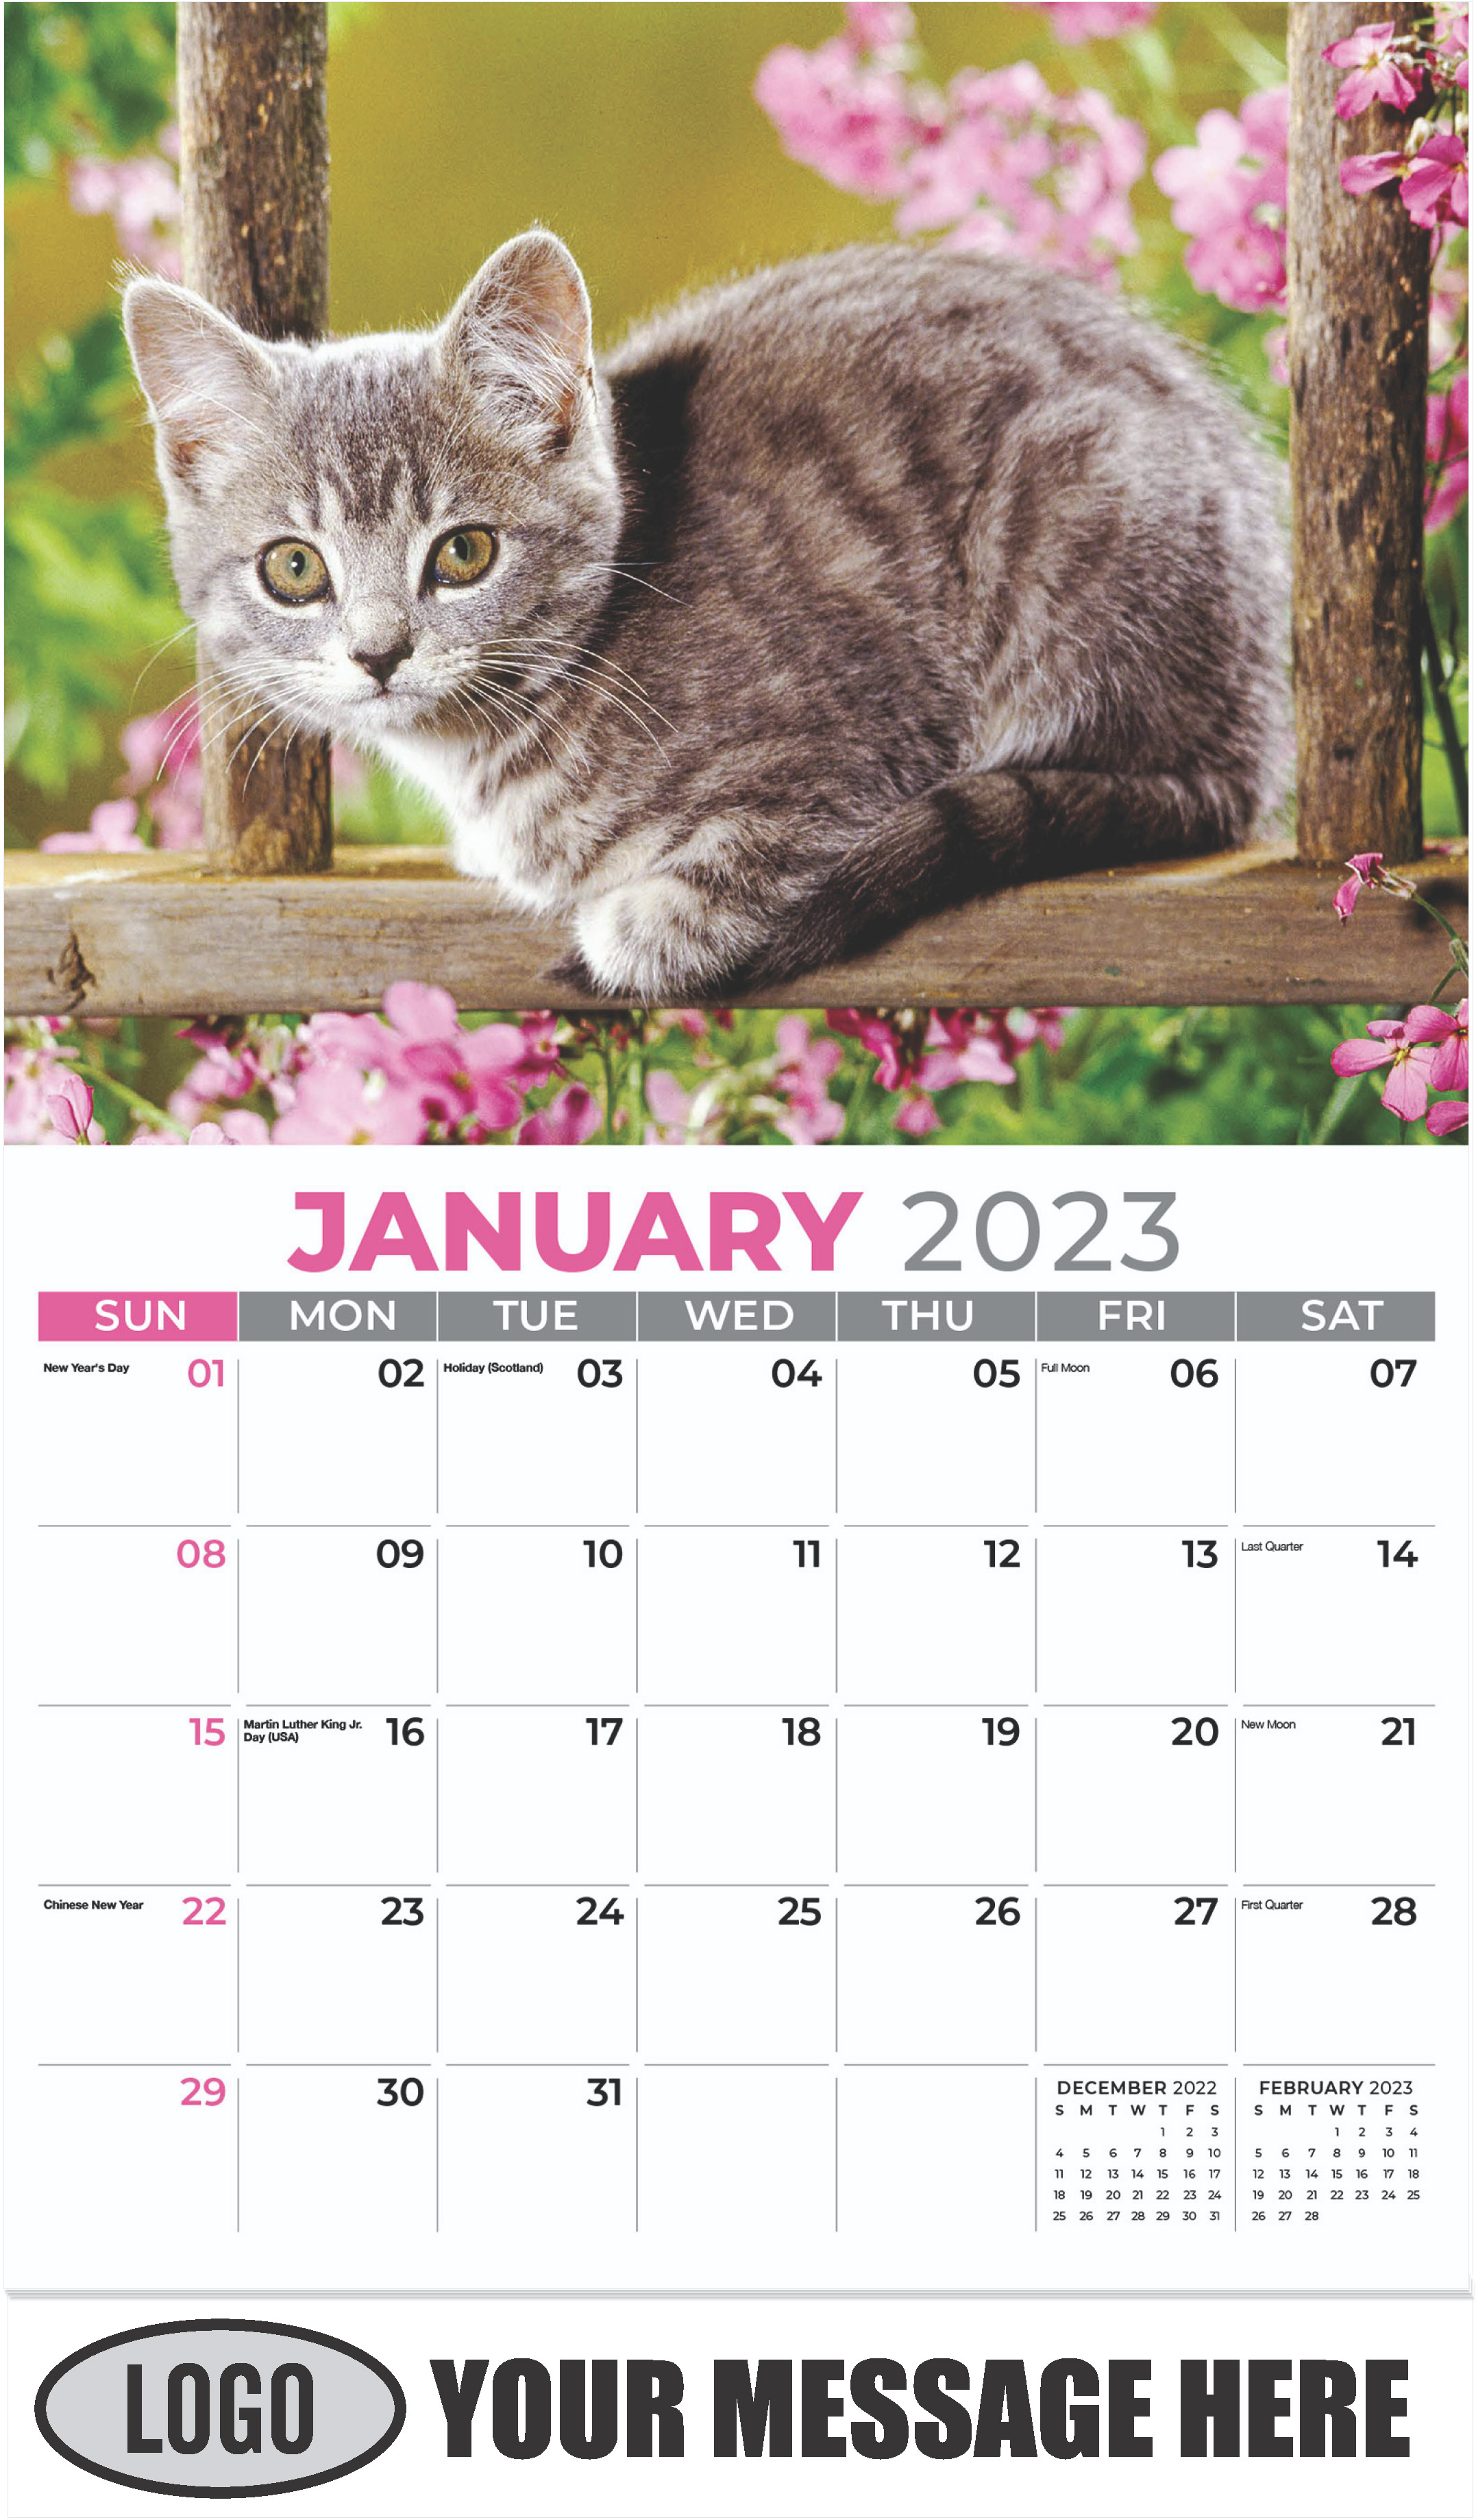 Blue tabby - January - Kittens 2023 Promotional Calendar